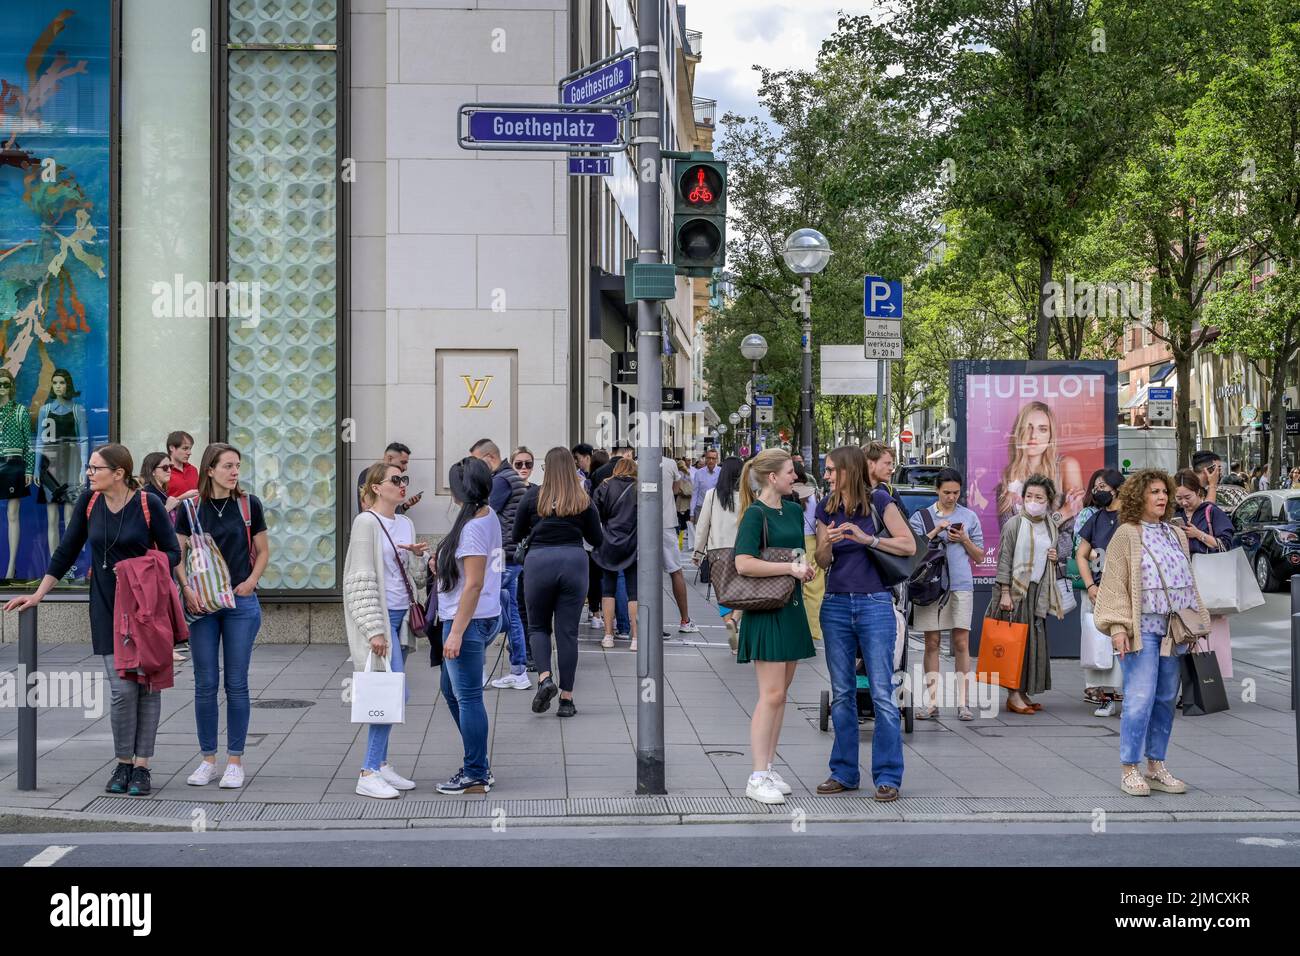 Queue, Louis Vuitton, Shopping, People, Goethestraße, Frankfurt am Main, Hesse, Germany, Europe Stock Photo